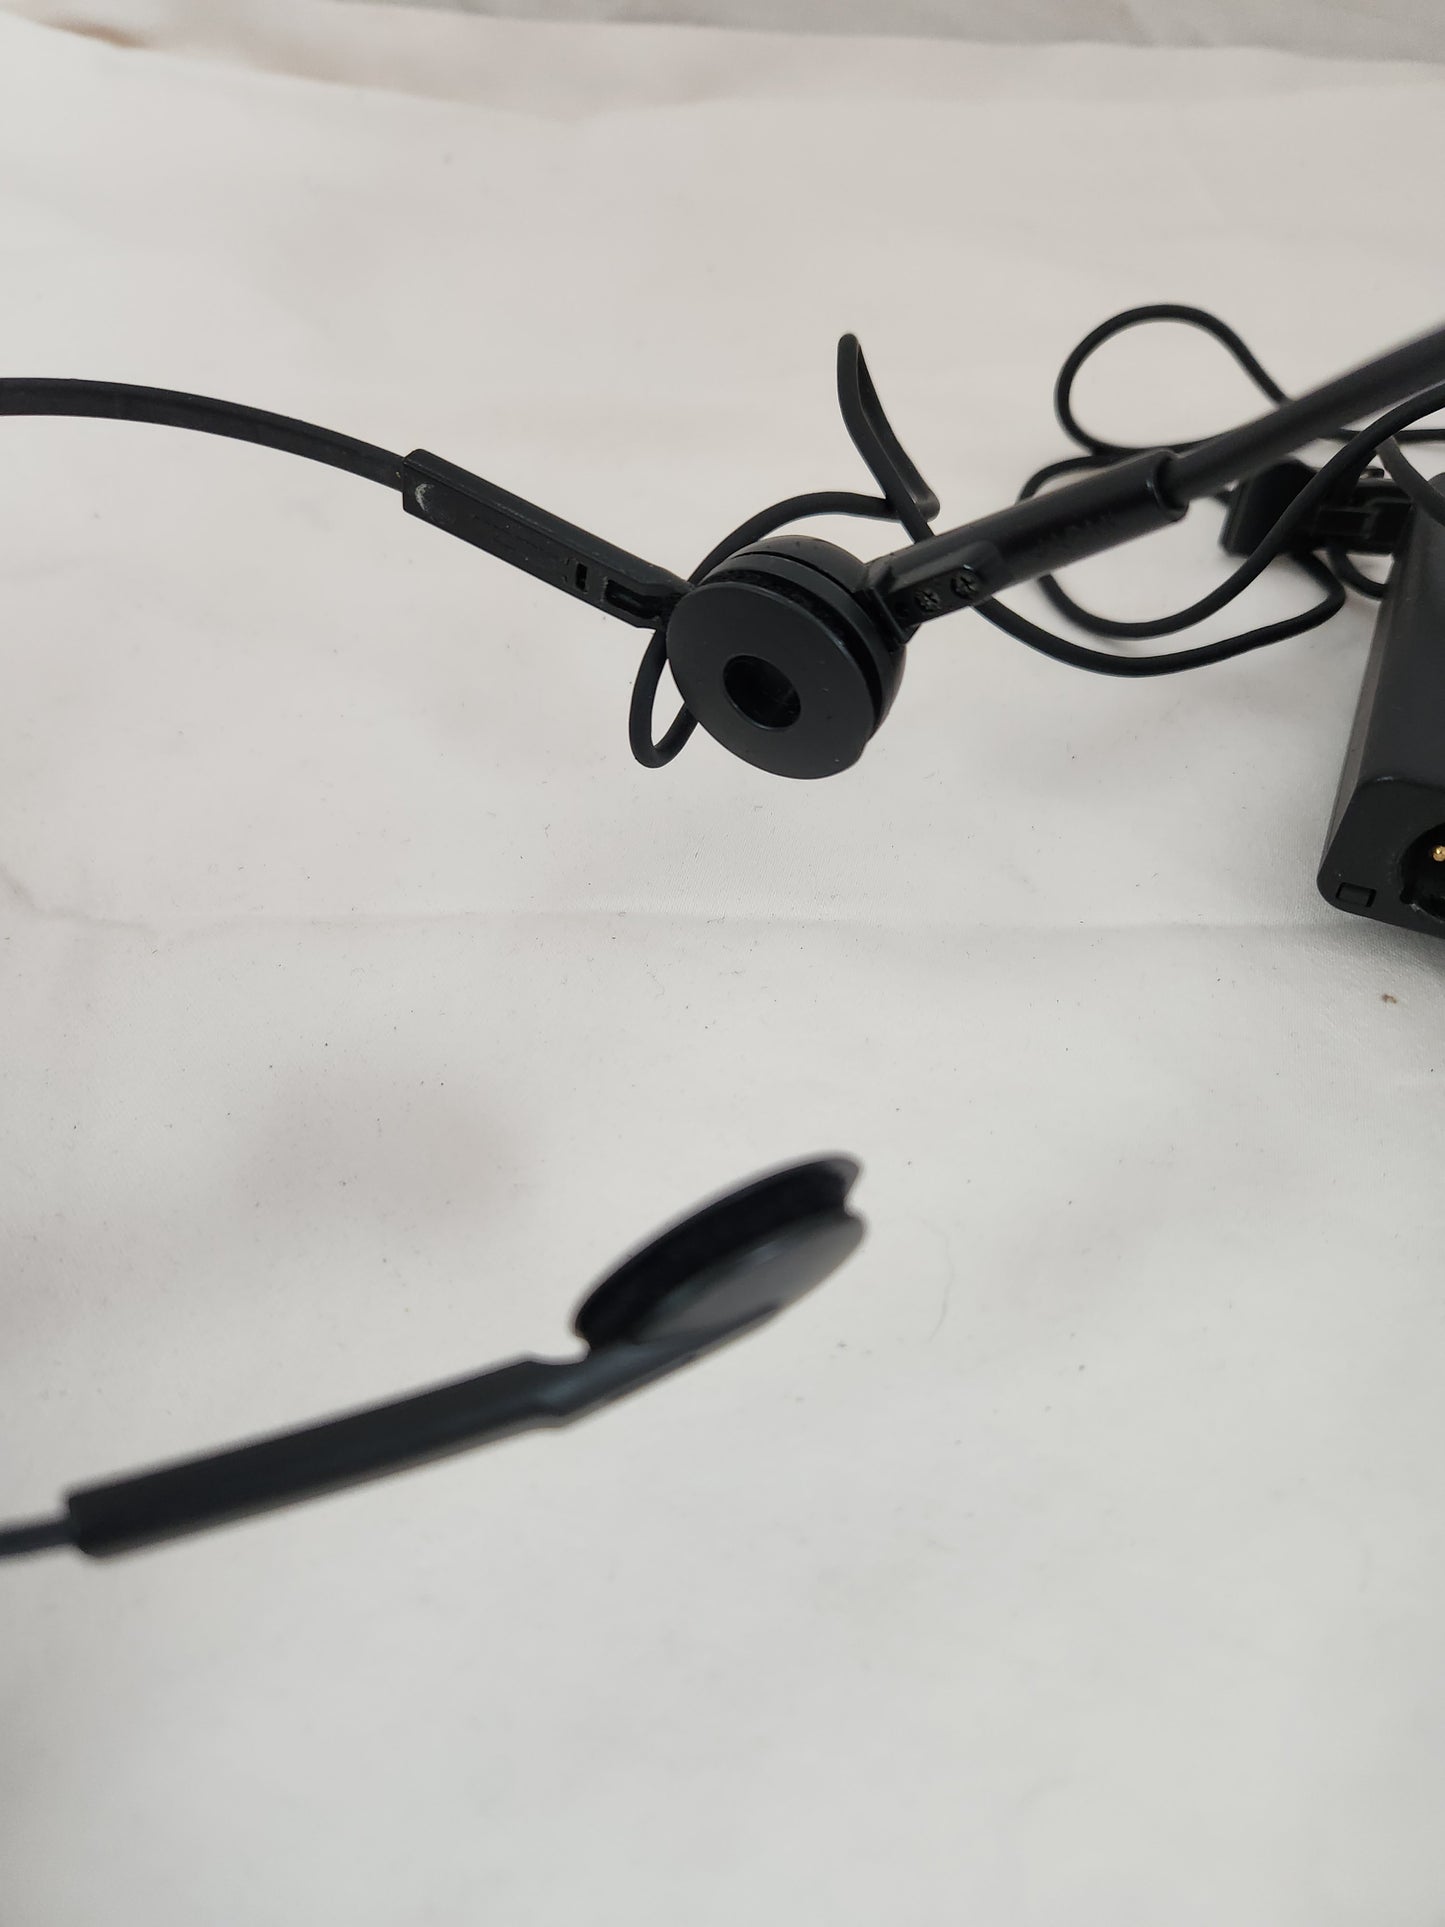 Audio-Technica Atm75 Head Worn Condenser Microphone